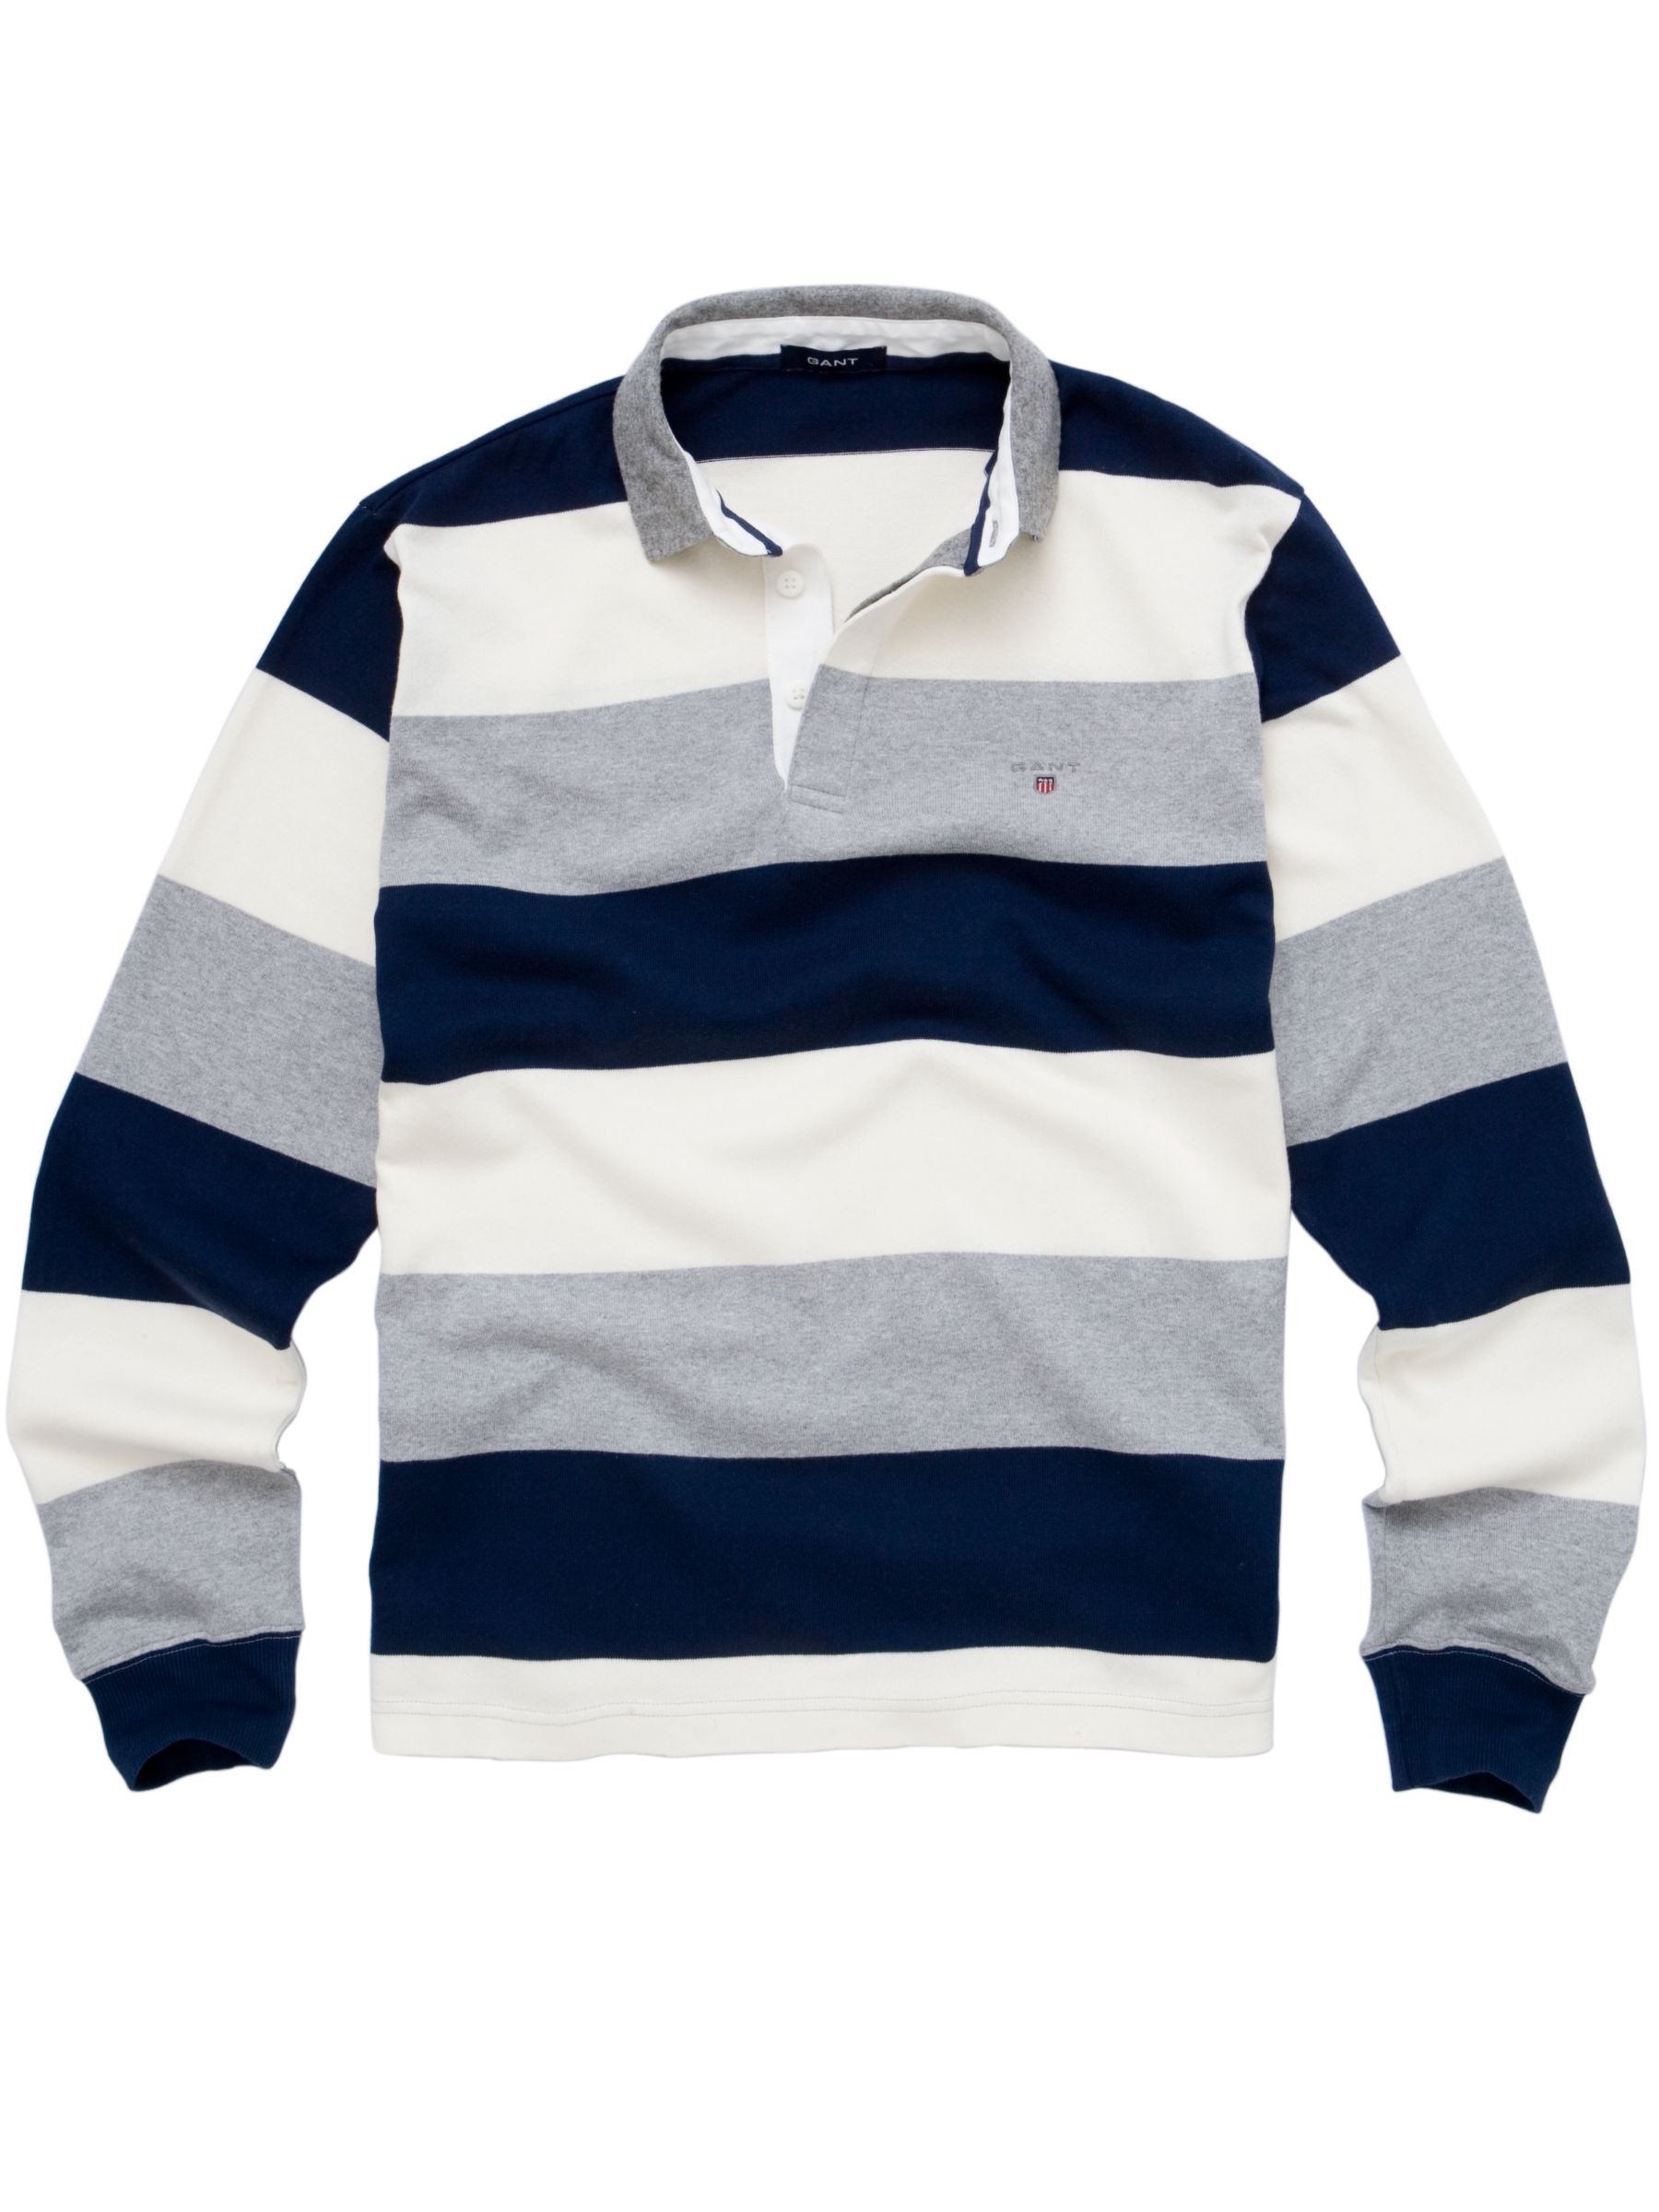 Bar Stripe Rugby Shirt, Light grey